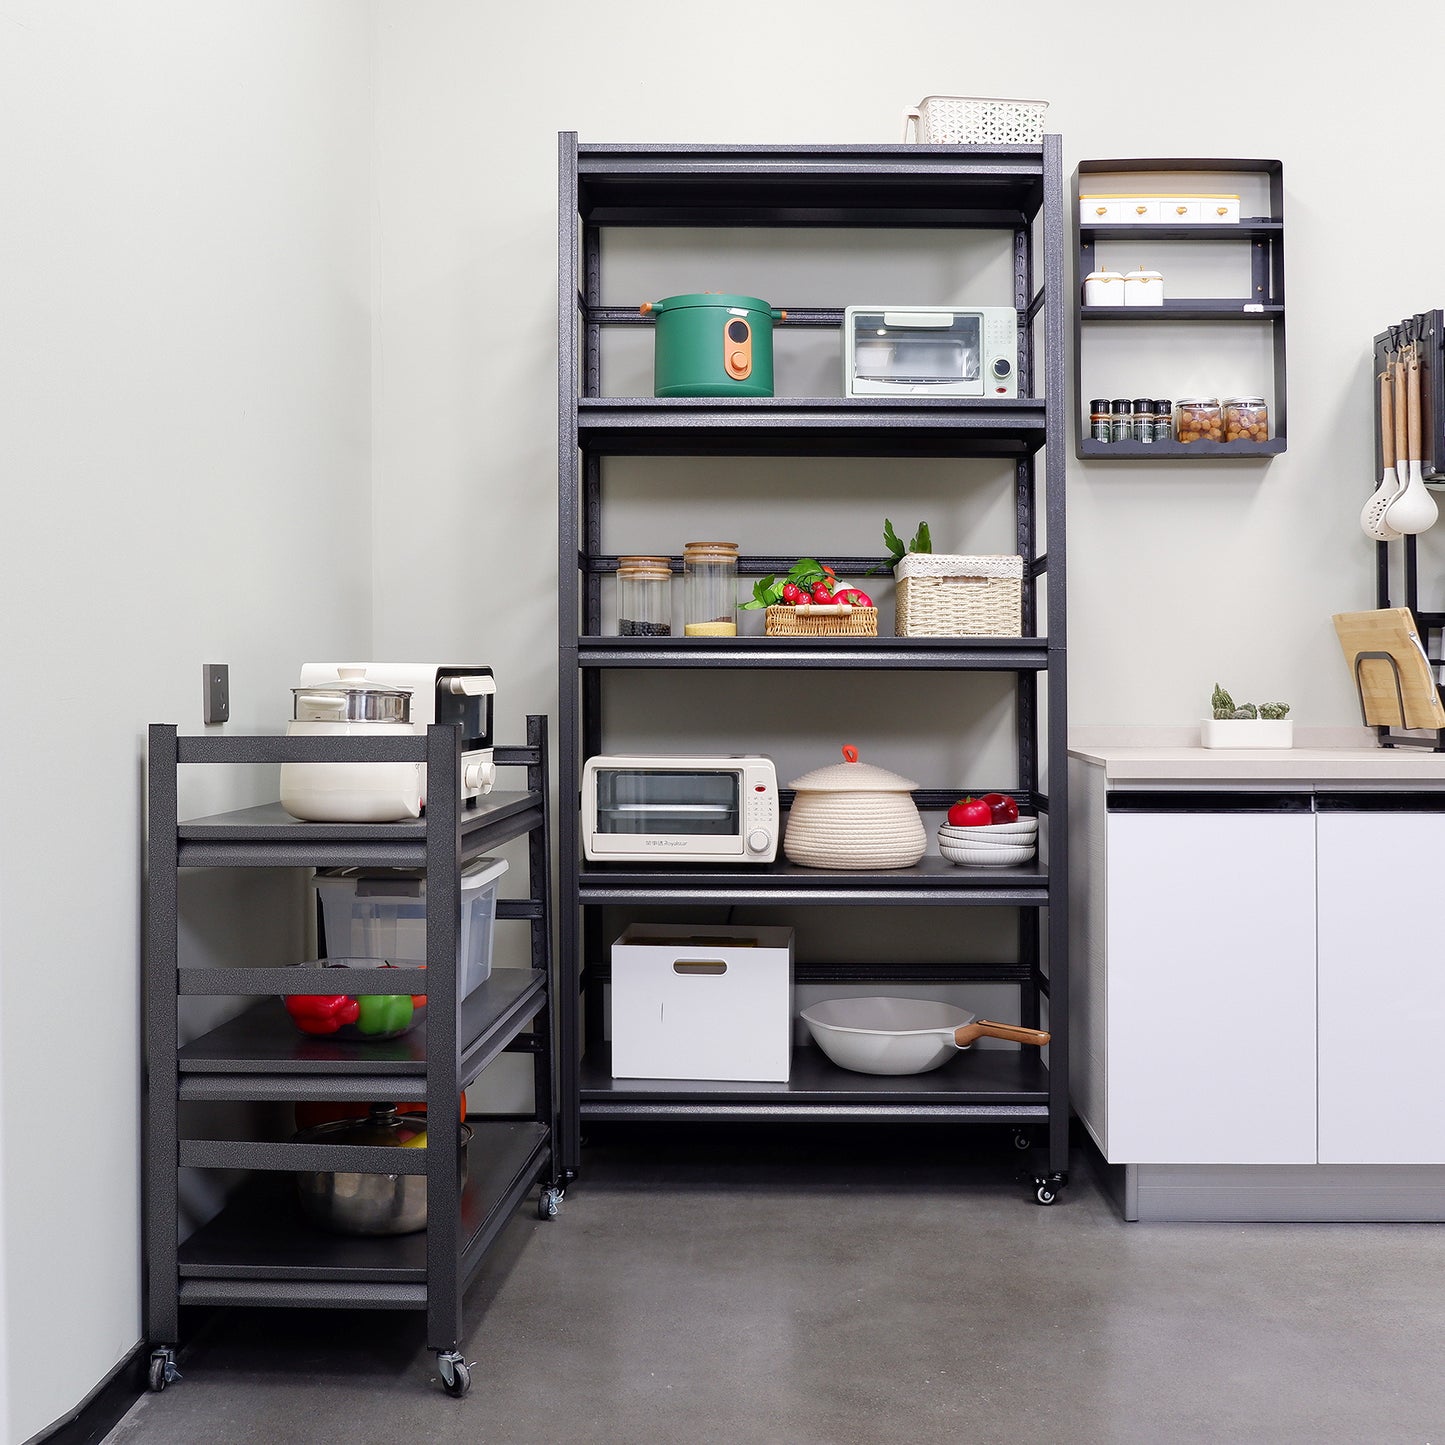 63"H Storage Shelves - Heavy Duty Metal Shelving Unit Adjustable 5-Tier Pantry Shelves with Wheels Load 1750LBS Kitchen Shelf Garage Storage